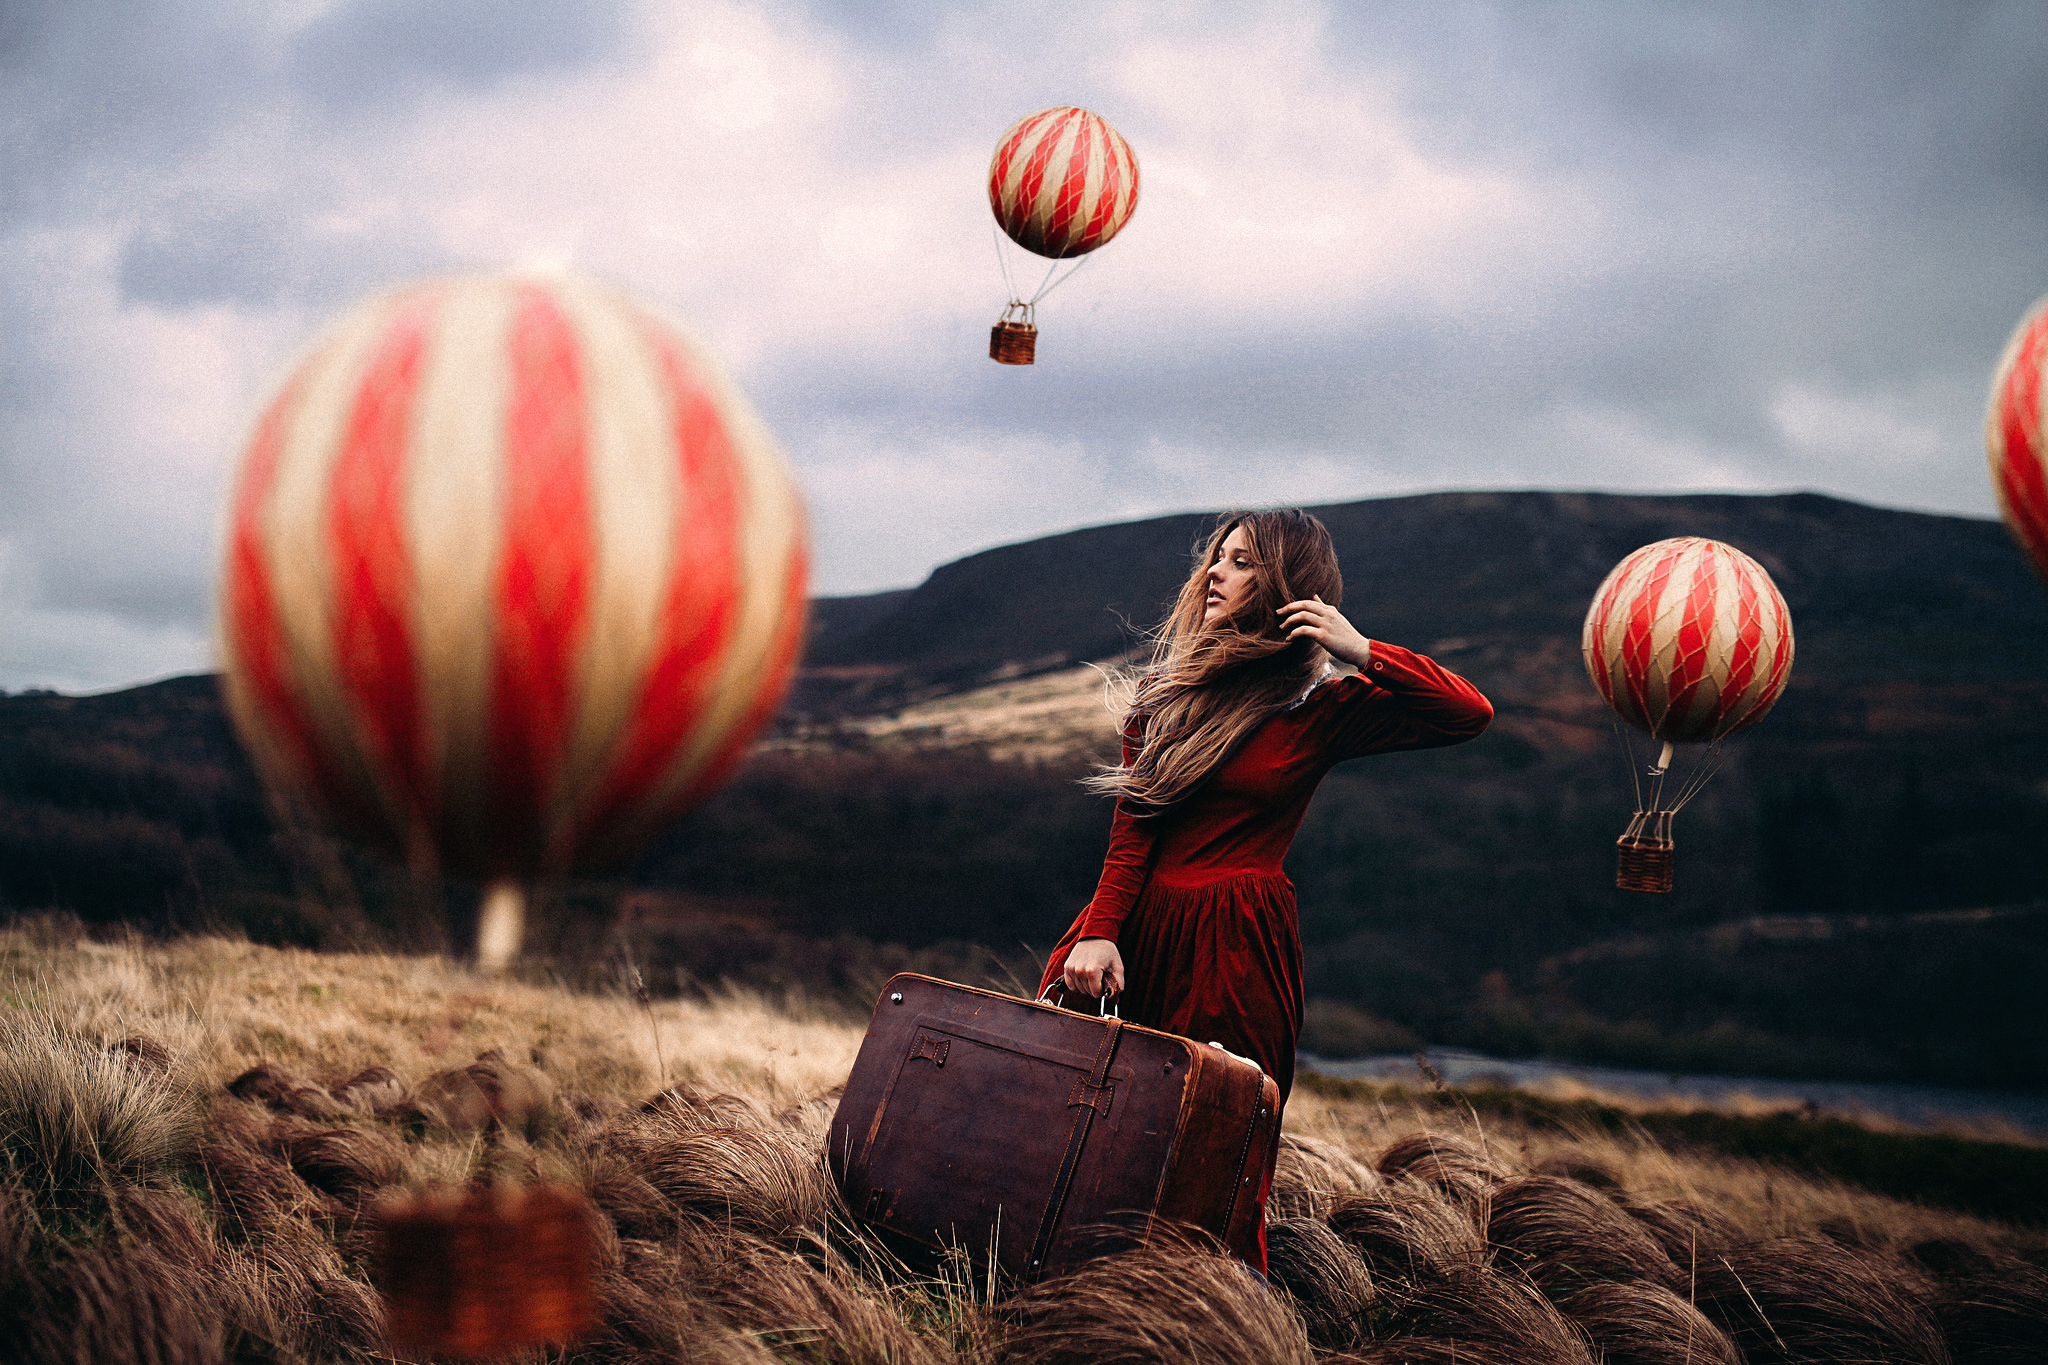 women, mood, hot air balloon, landscape, outdoor, red dress, suitcase